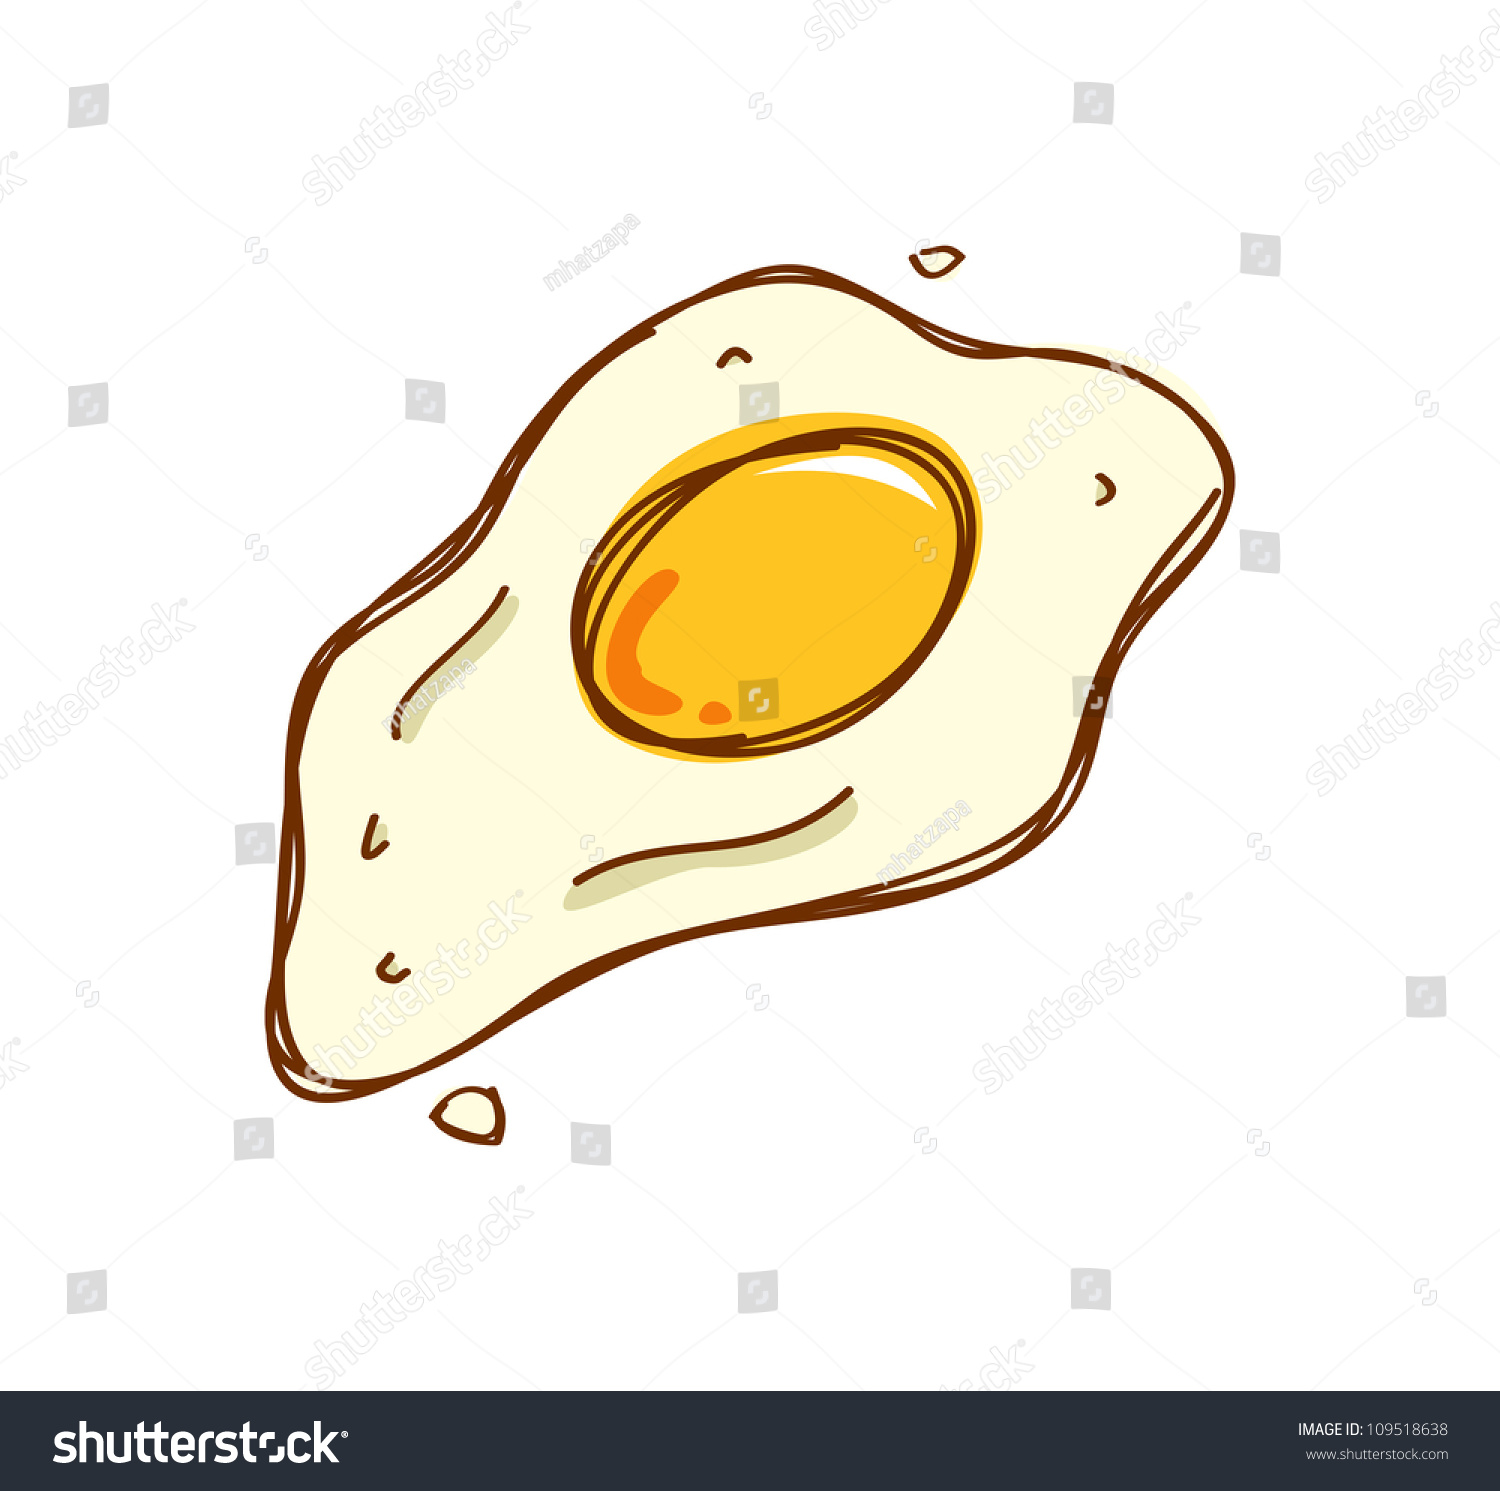 Жареное яйцо векторный контур